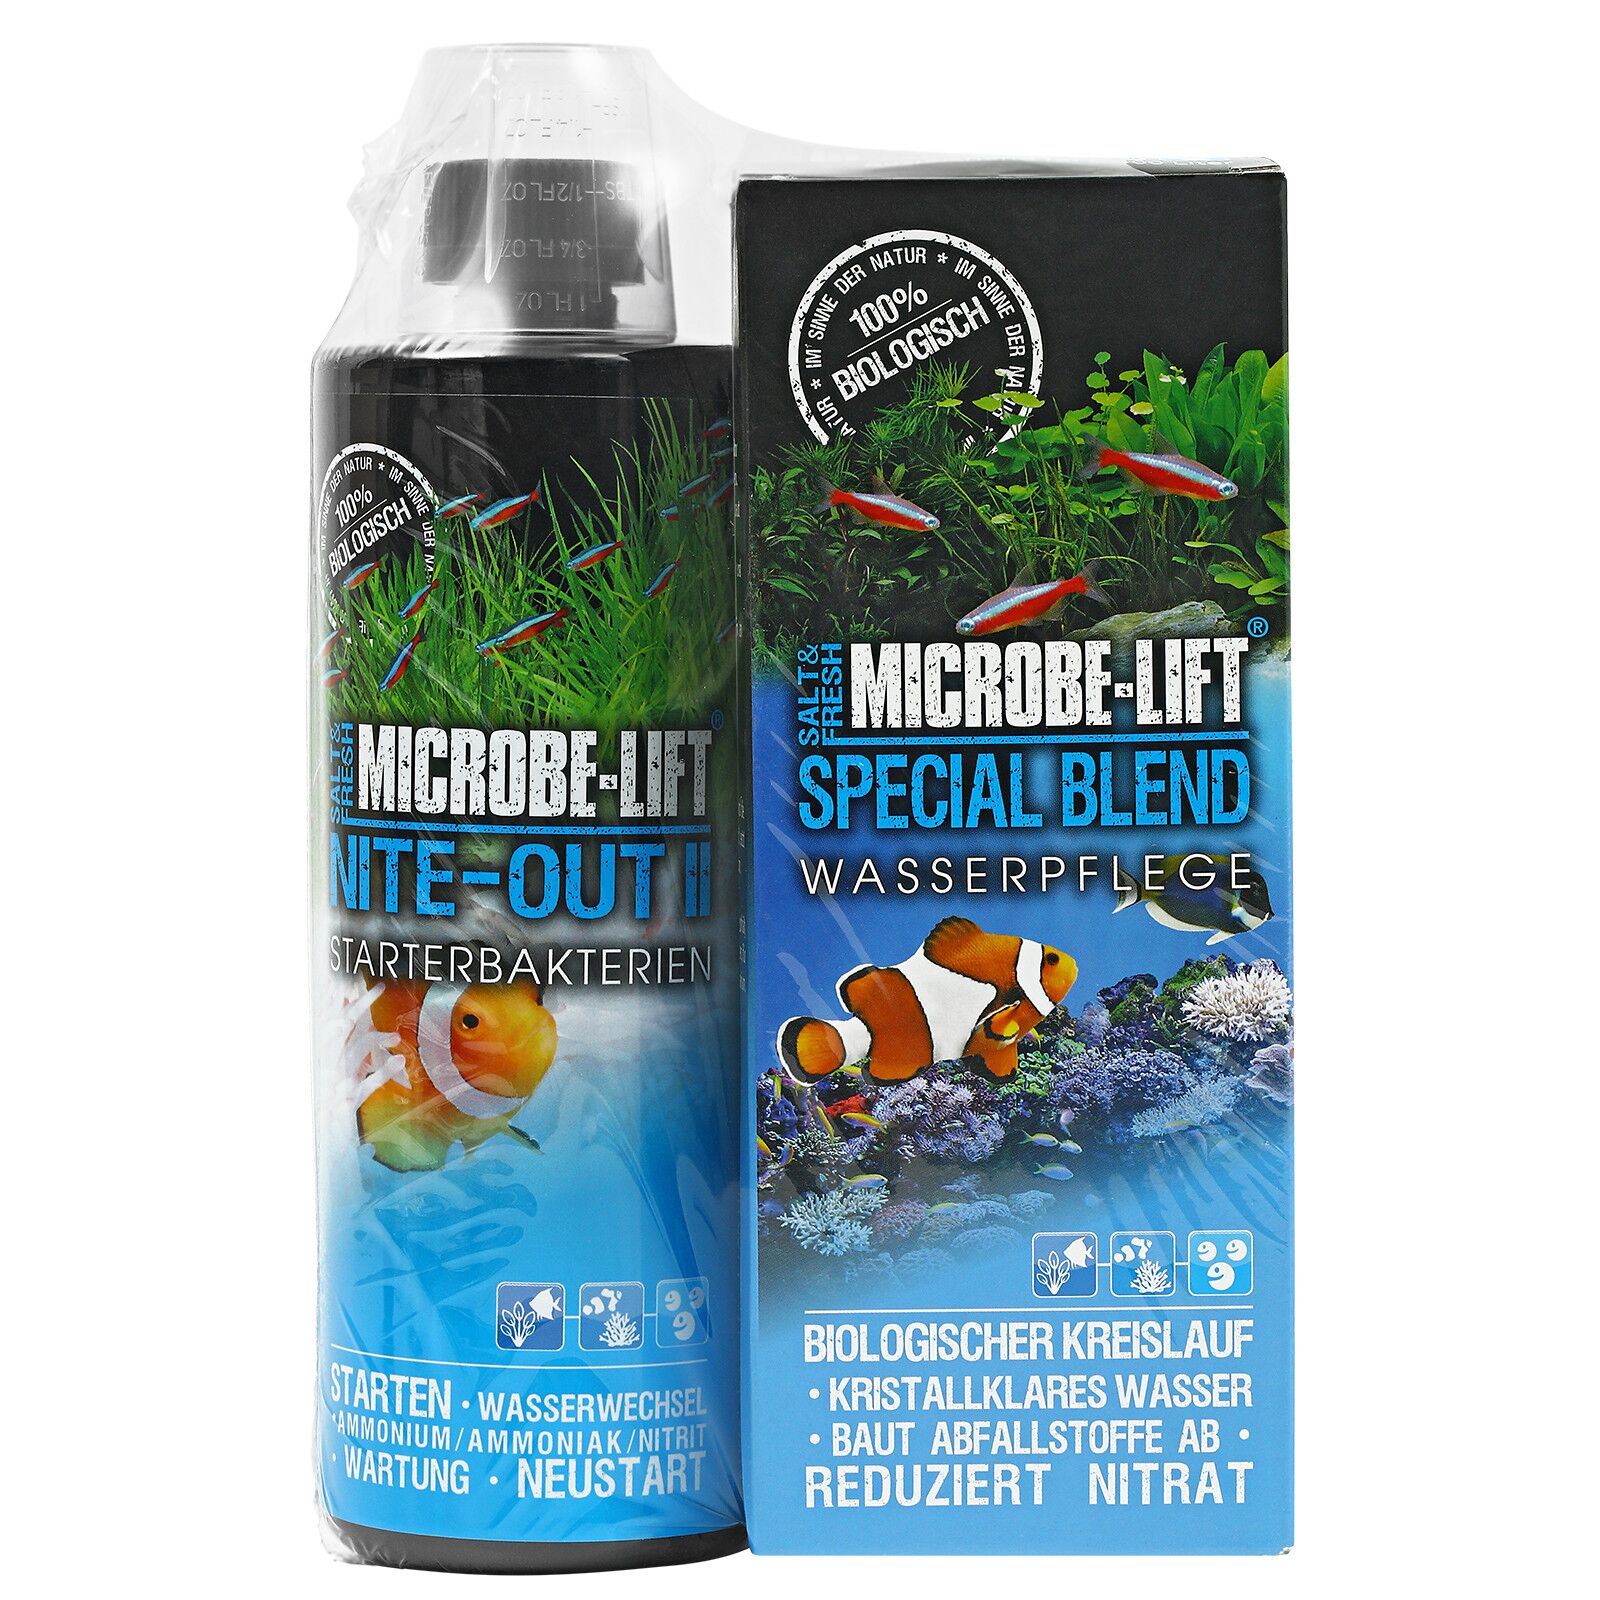 Microbe-Lift Nite-Out II Nitrifying Bacteria – Aqua Forest Aquarium